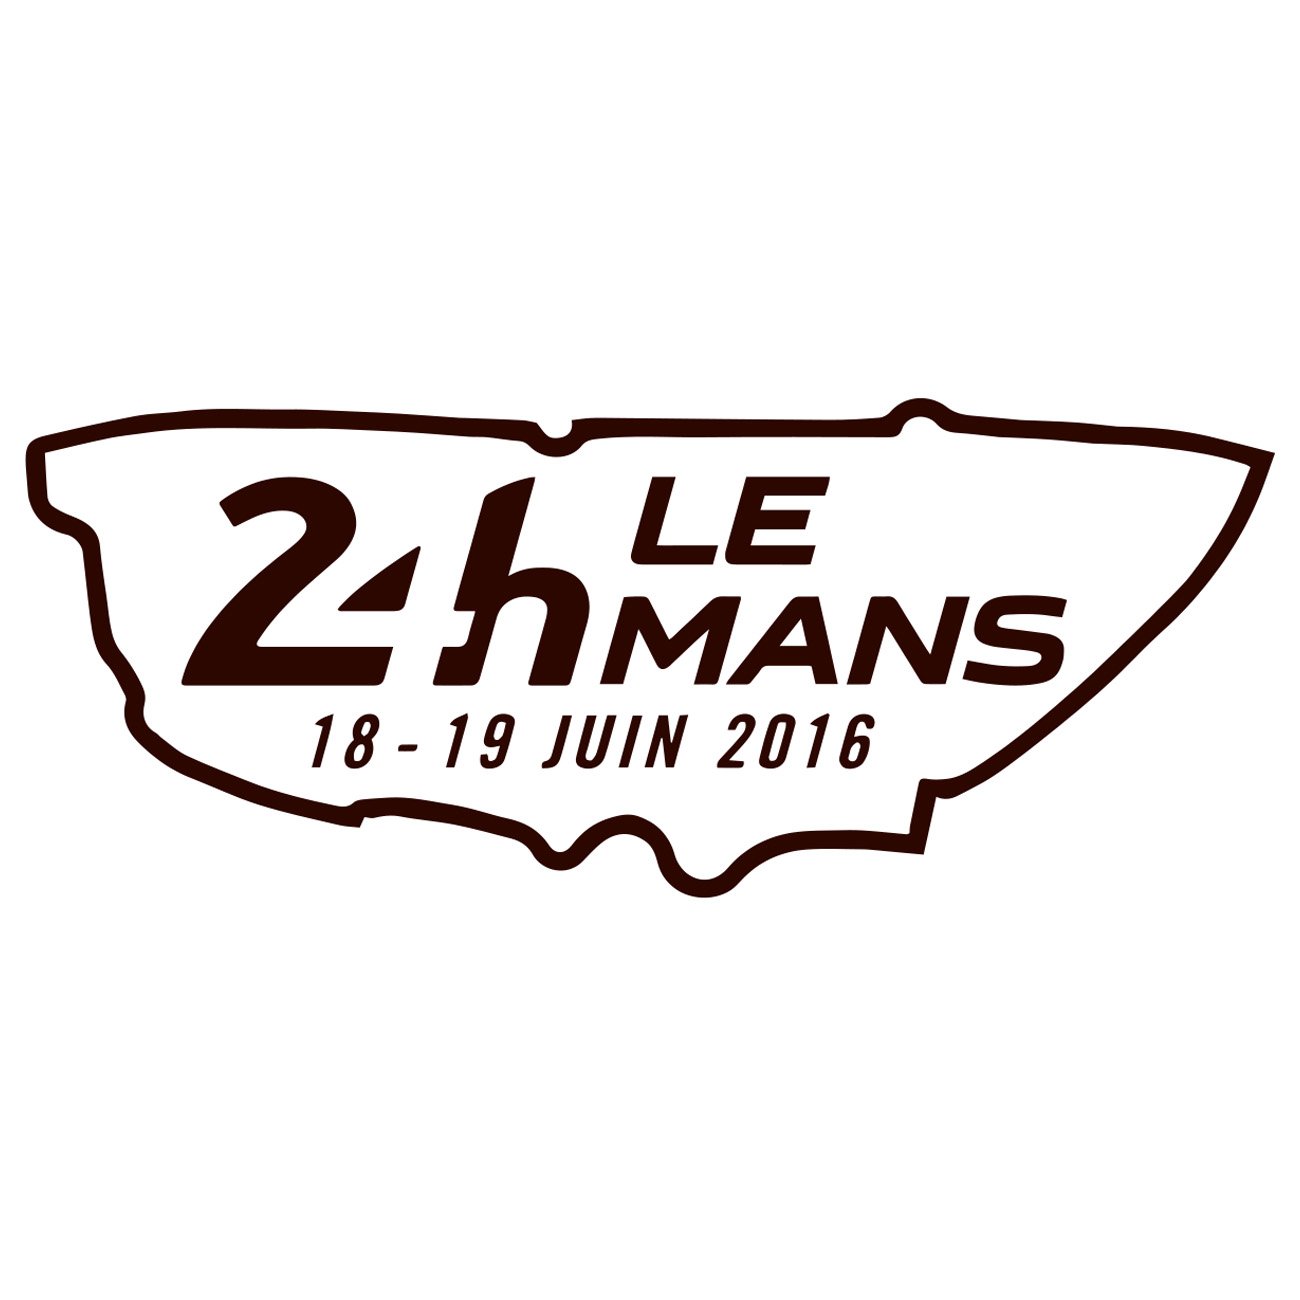 24 lemans logo - 2016 - 2